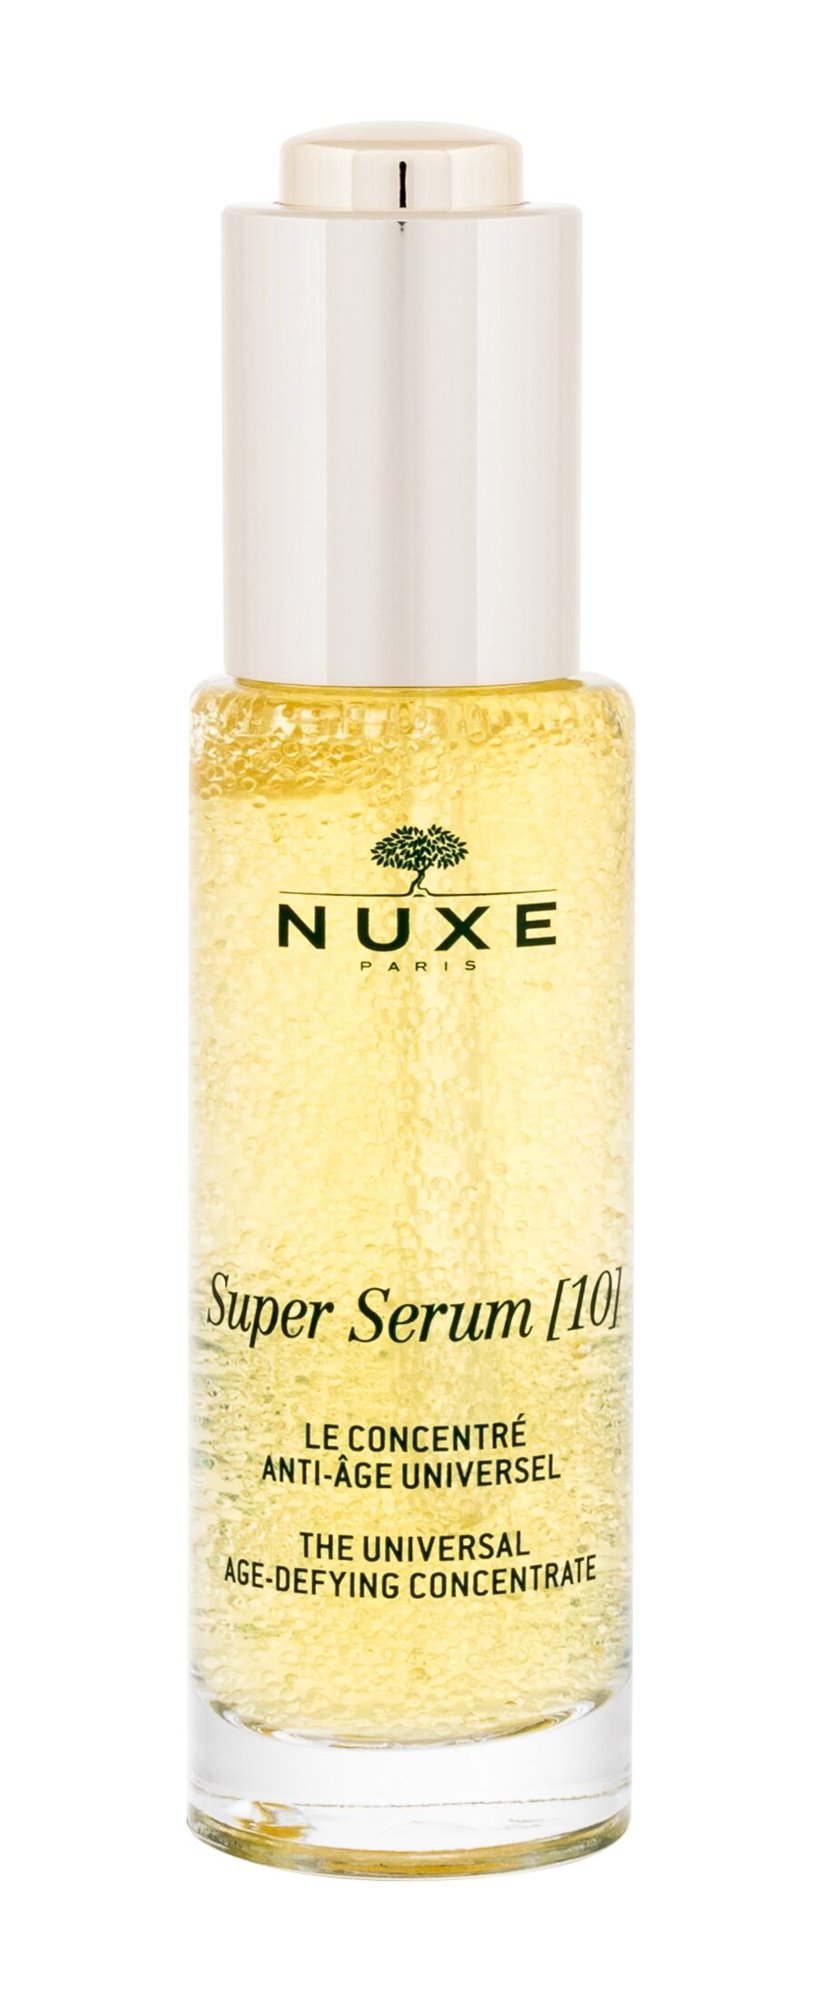 Nuxe Super Serum [10] Veido serumas